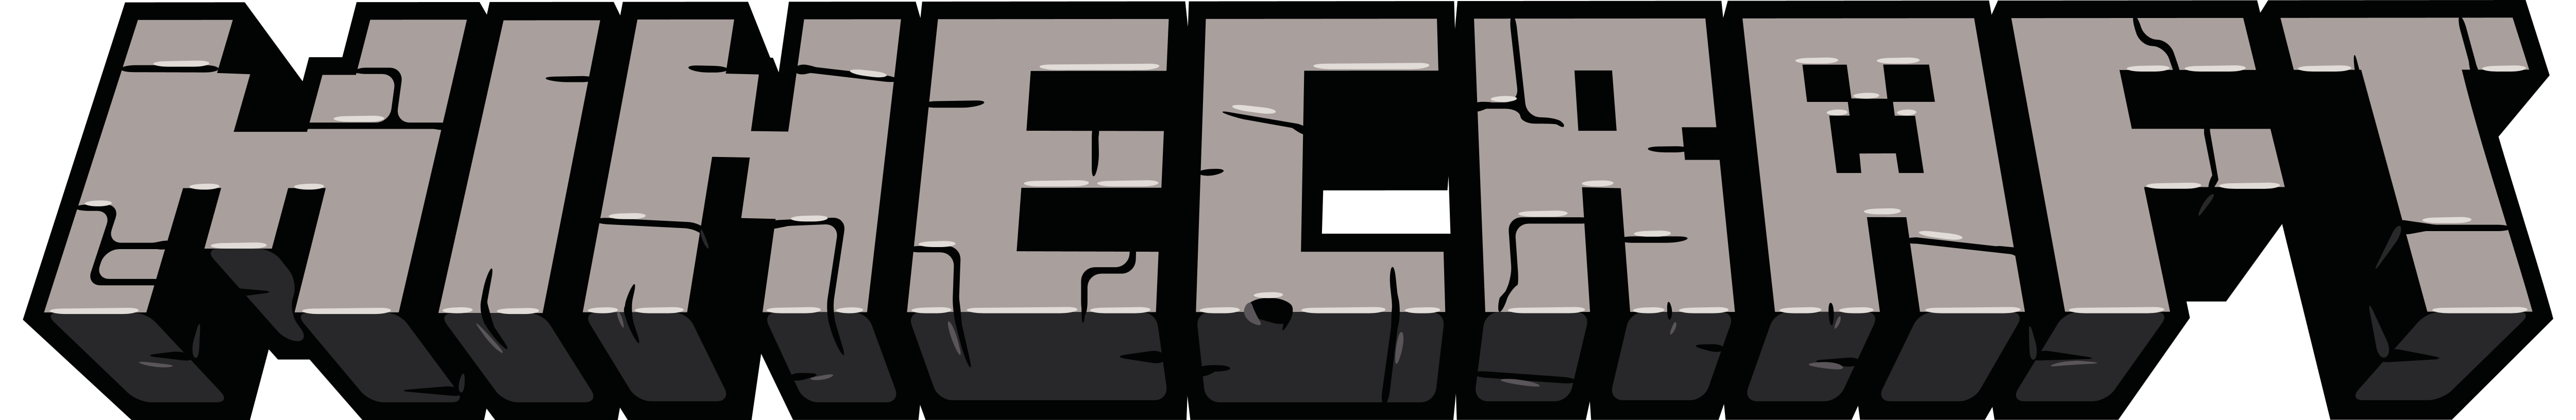 minecraft logo png download #11550